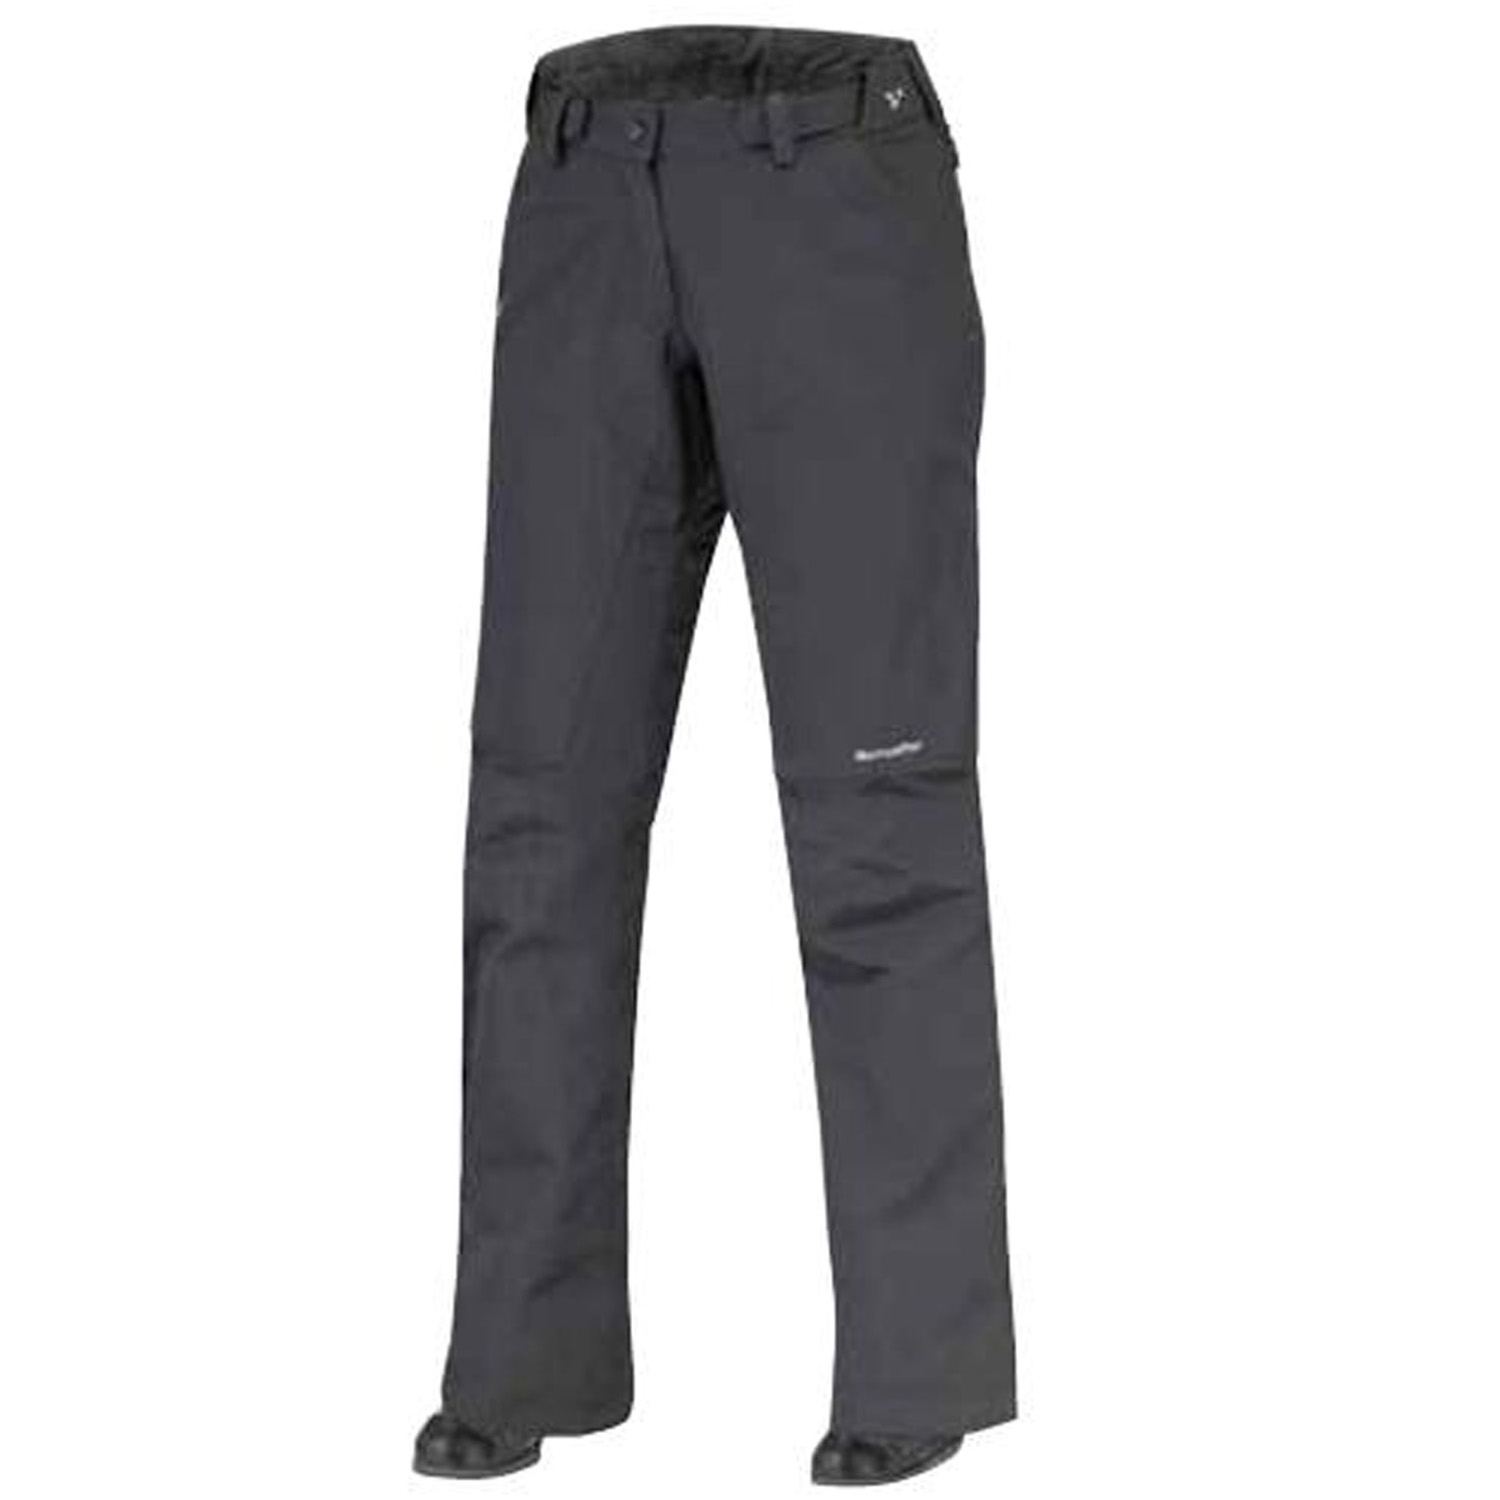 Can-Am Spyder New OEM Ladies Tech Plus Pants 14 Black, 4415143490 | eBay